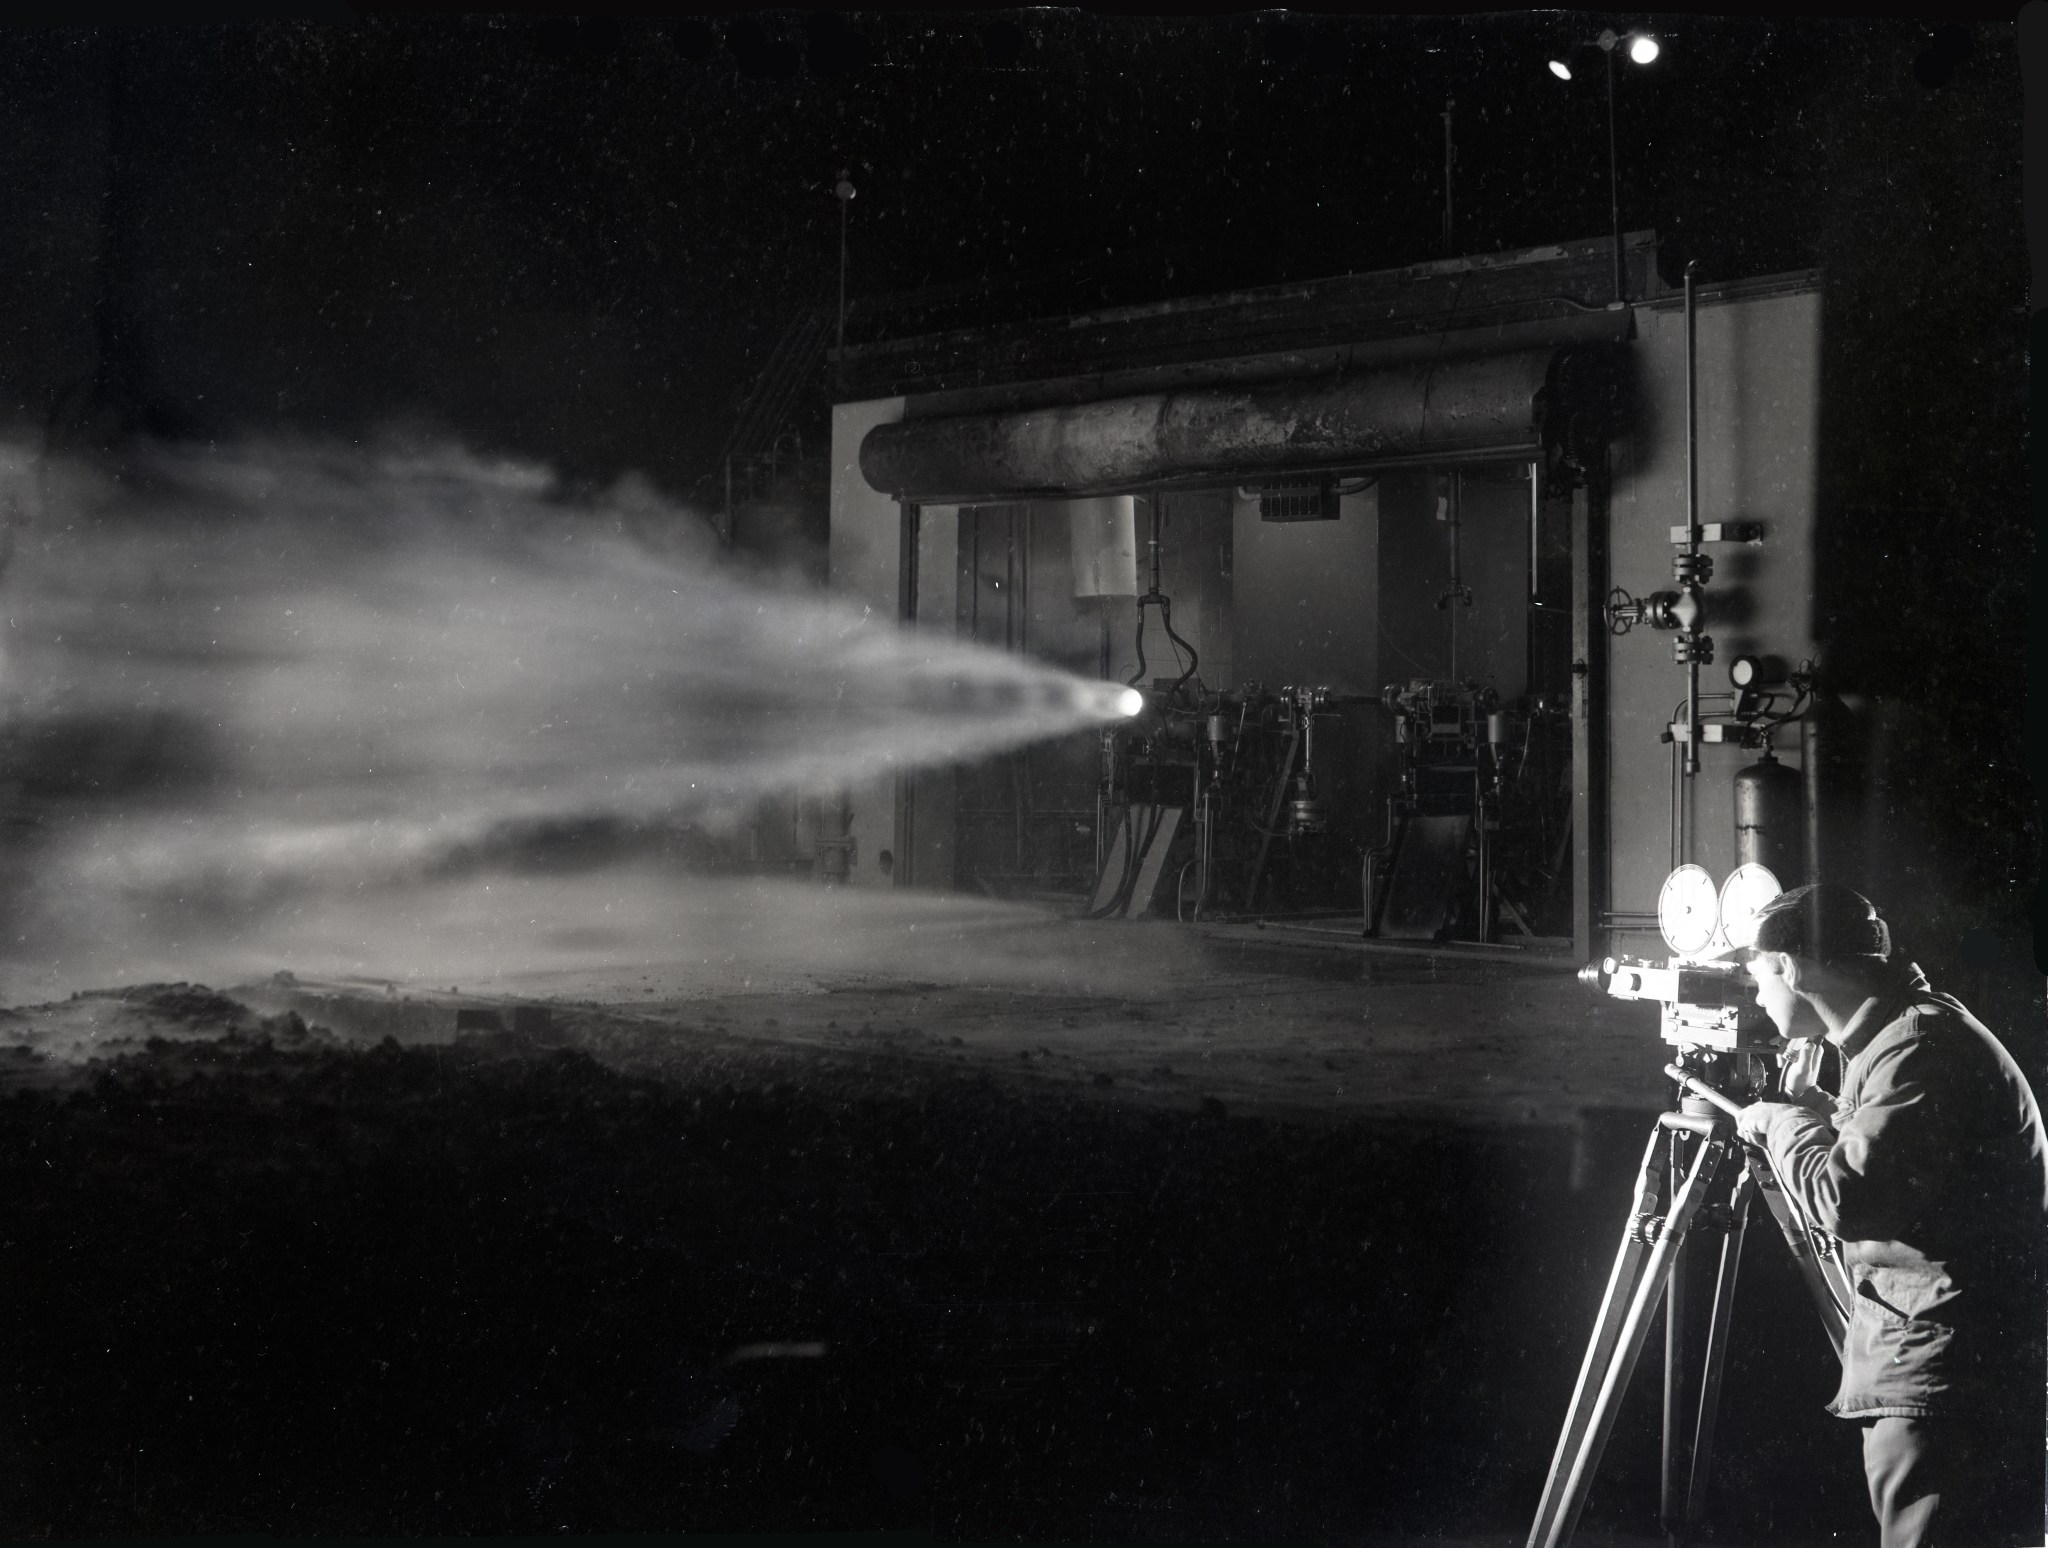 Film photographer looks through camera at rocket engine firing.